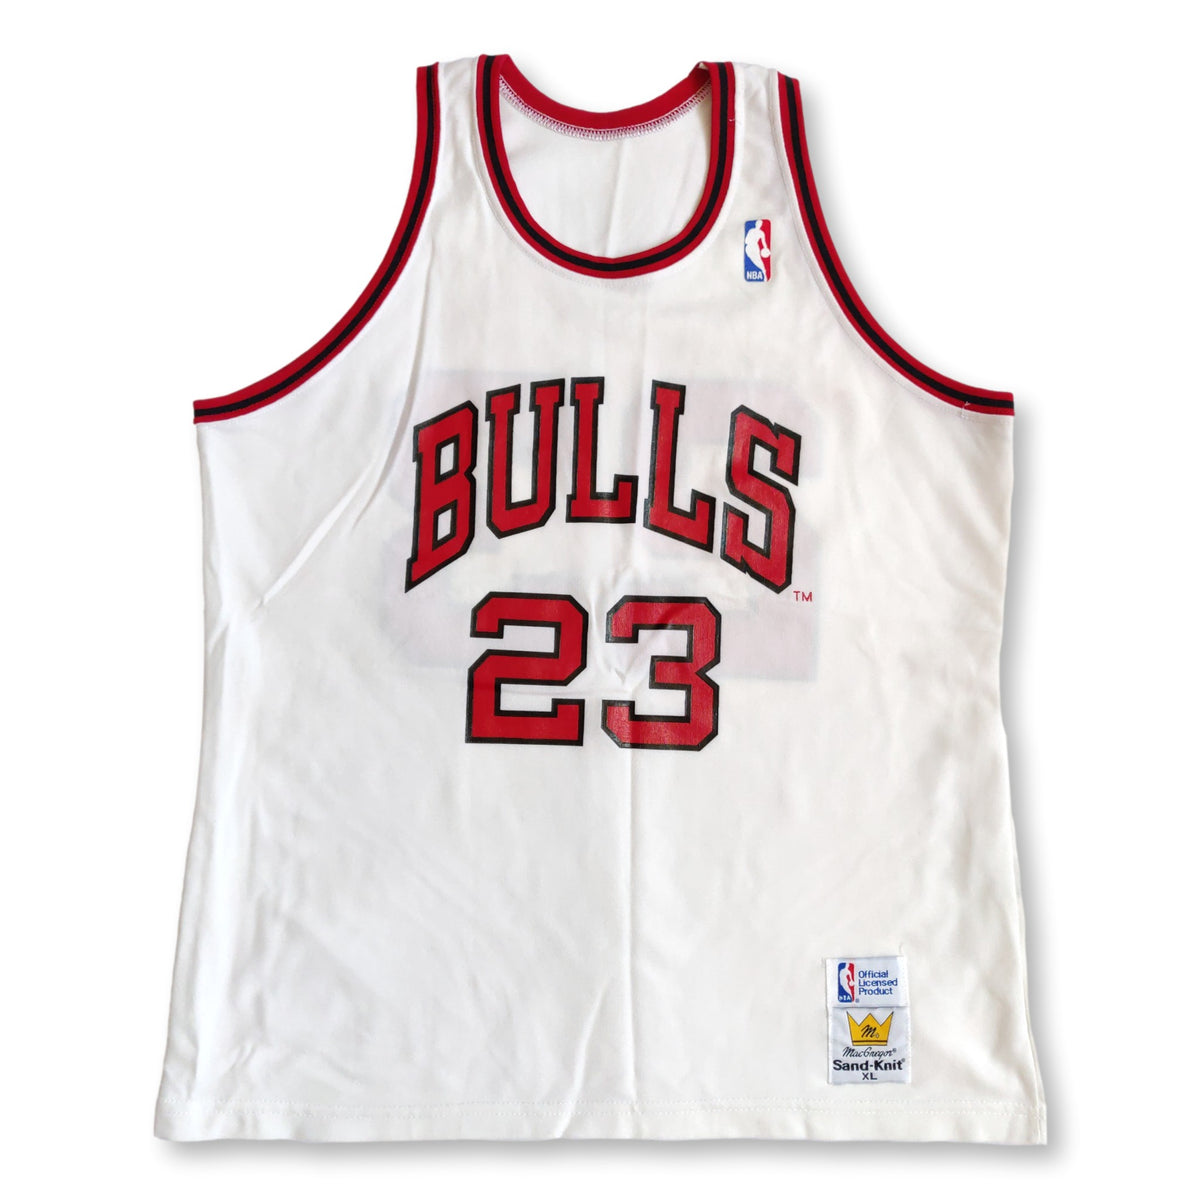 bulls 23 shirt